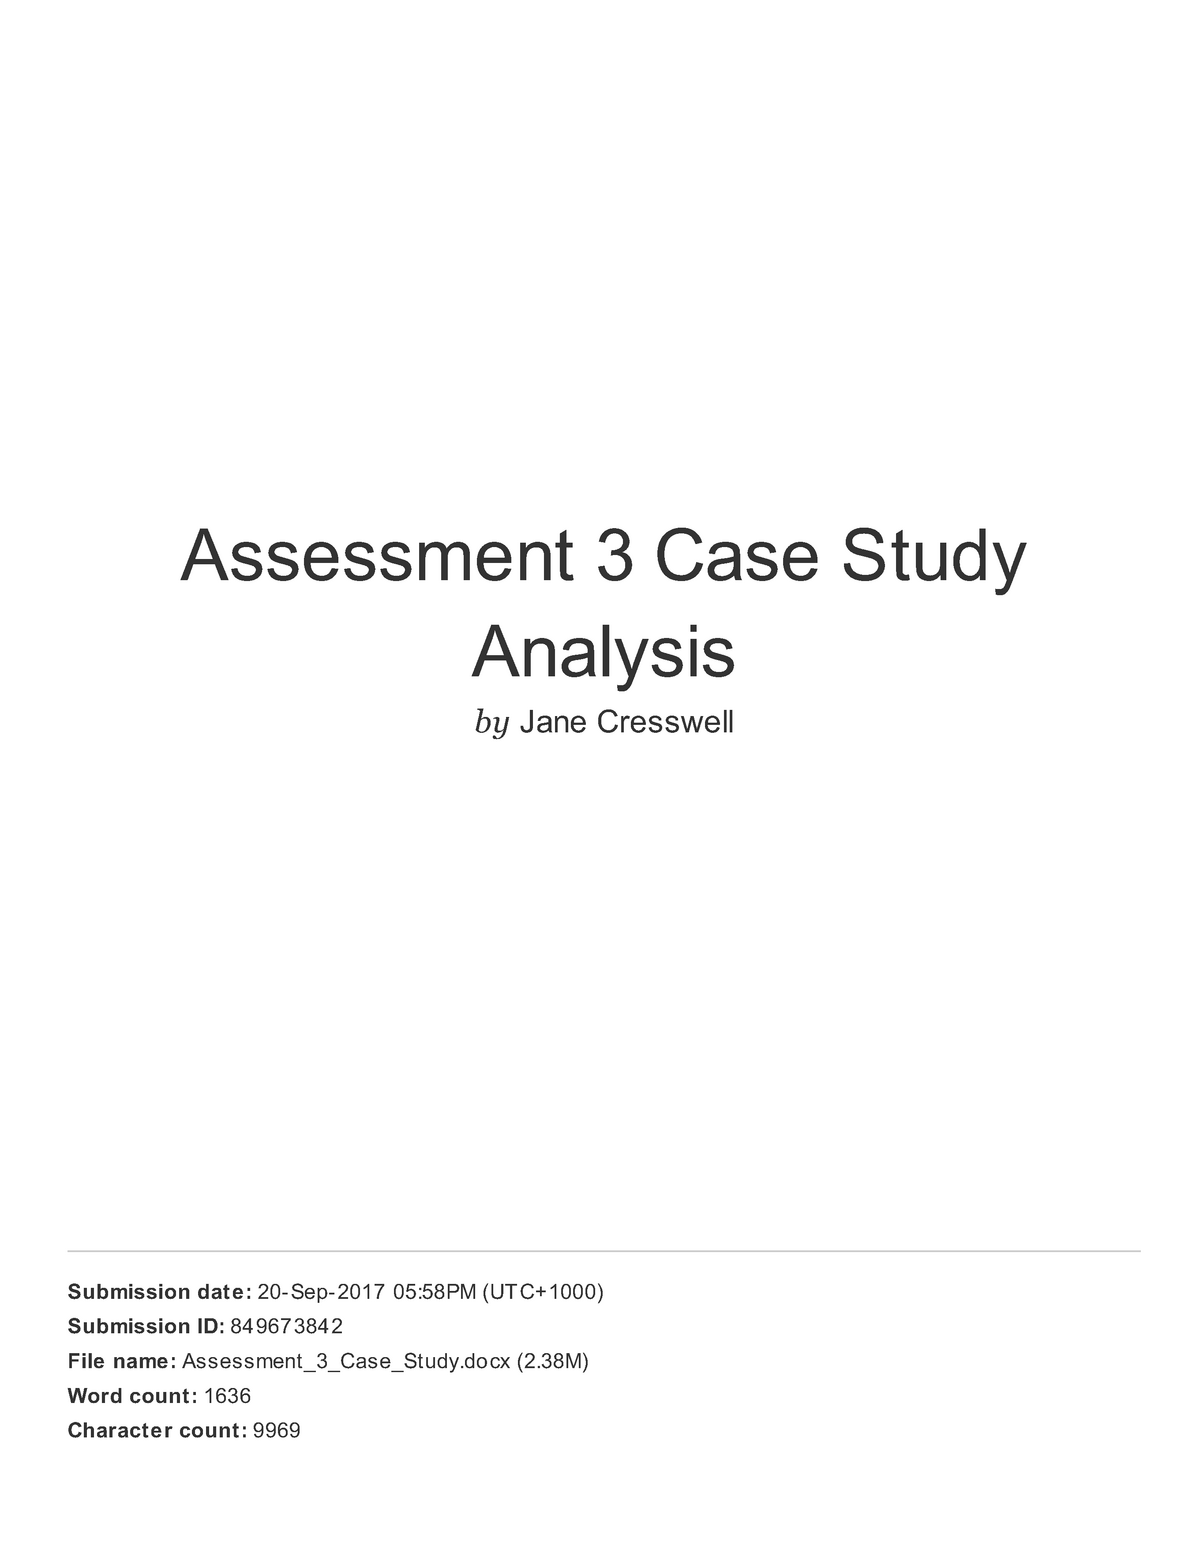 case study assessment civil service